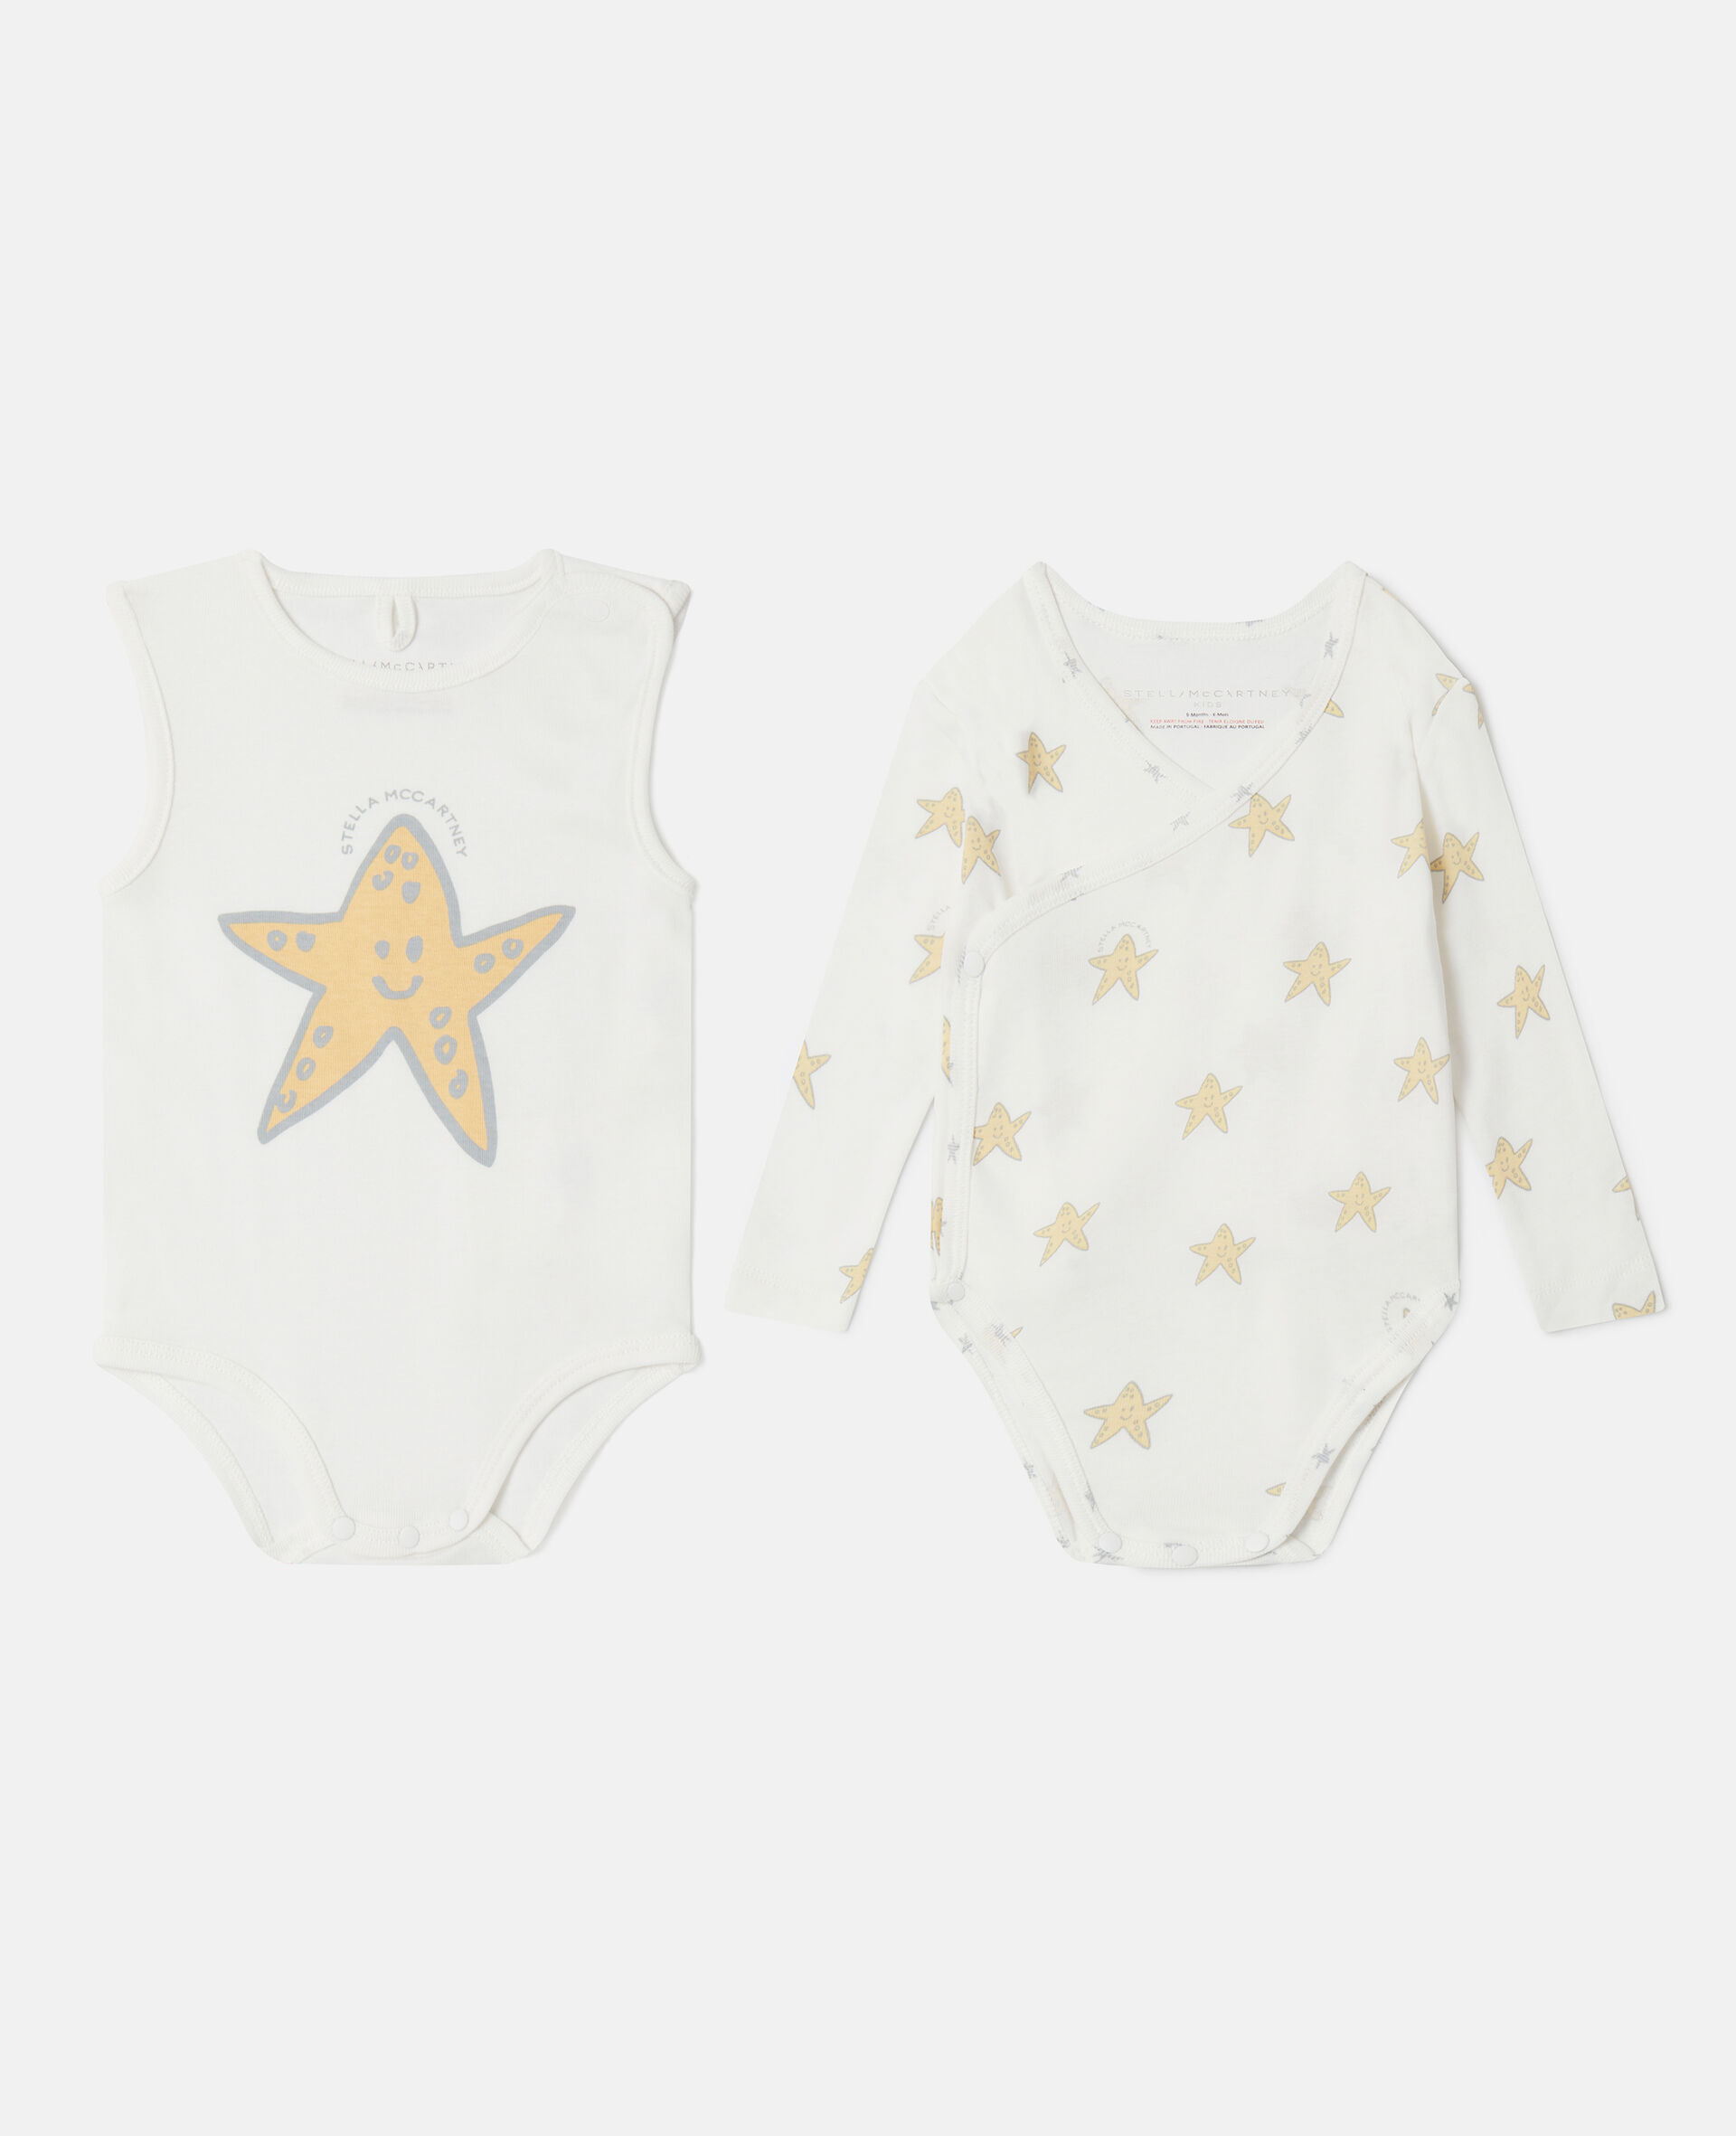 Smiling Stella Star Print Bodysuit and Sleepsuit Set-Fantasia-medium